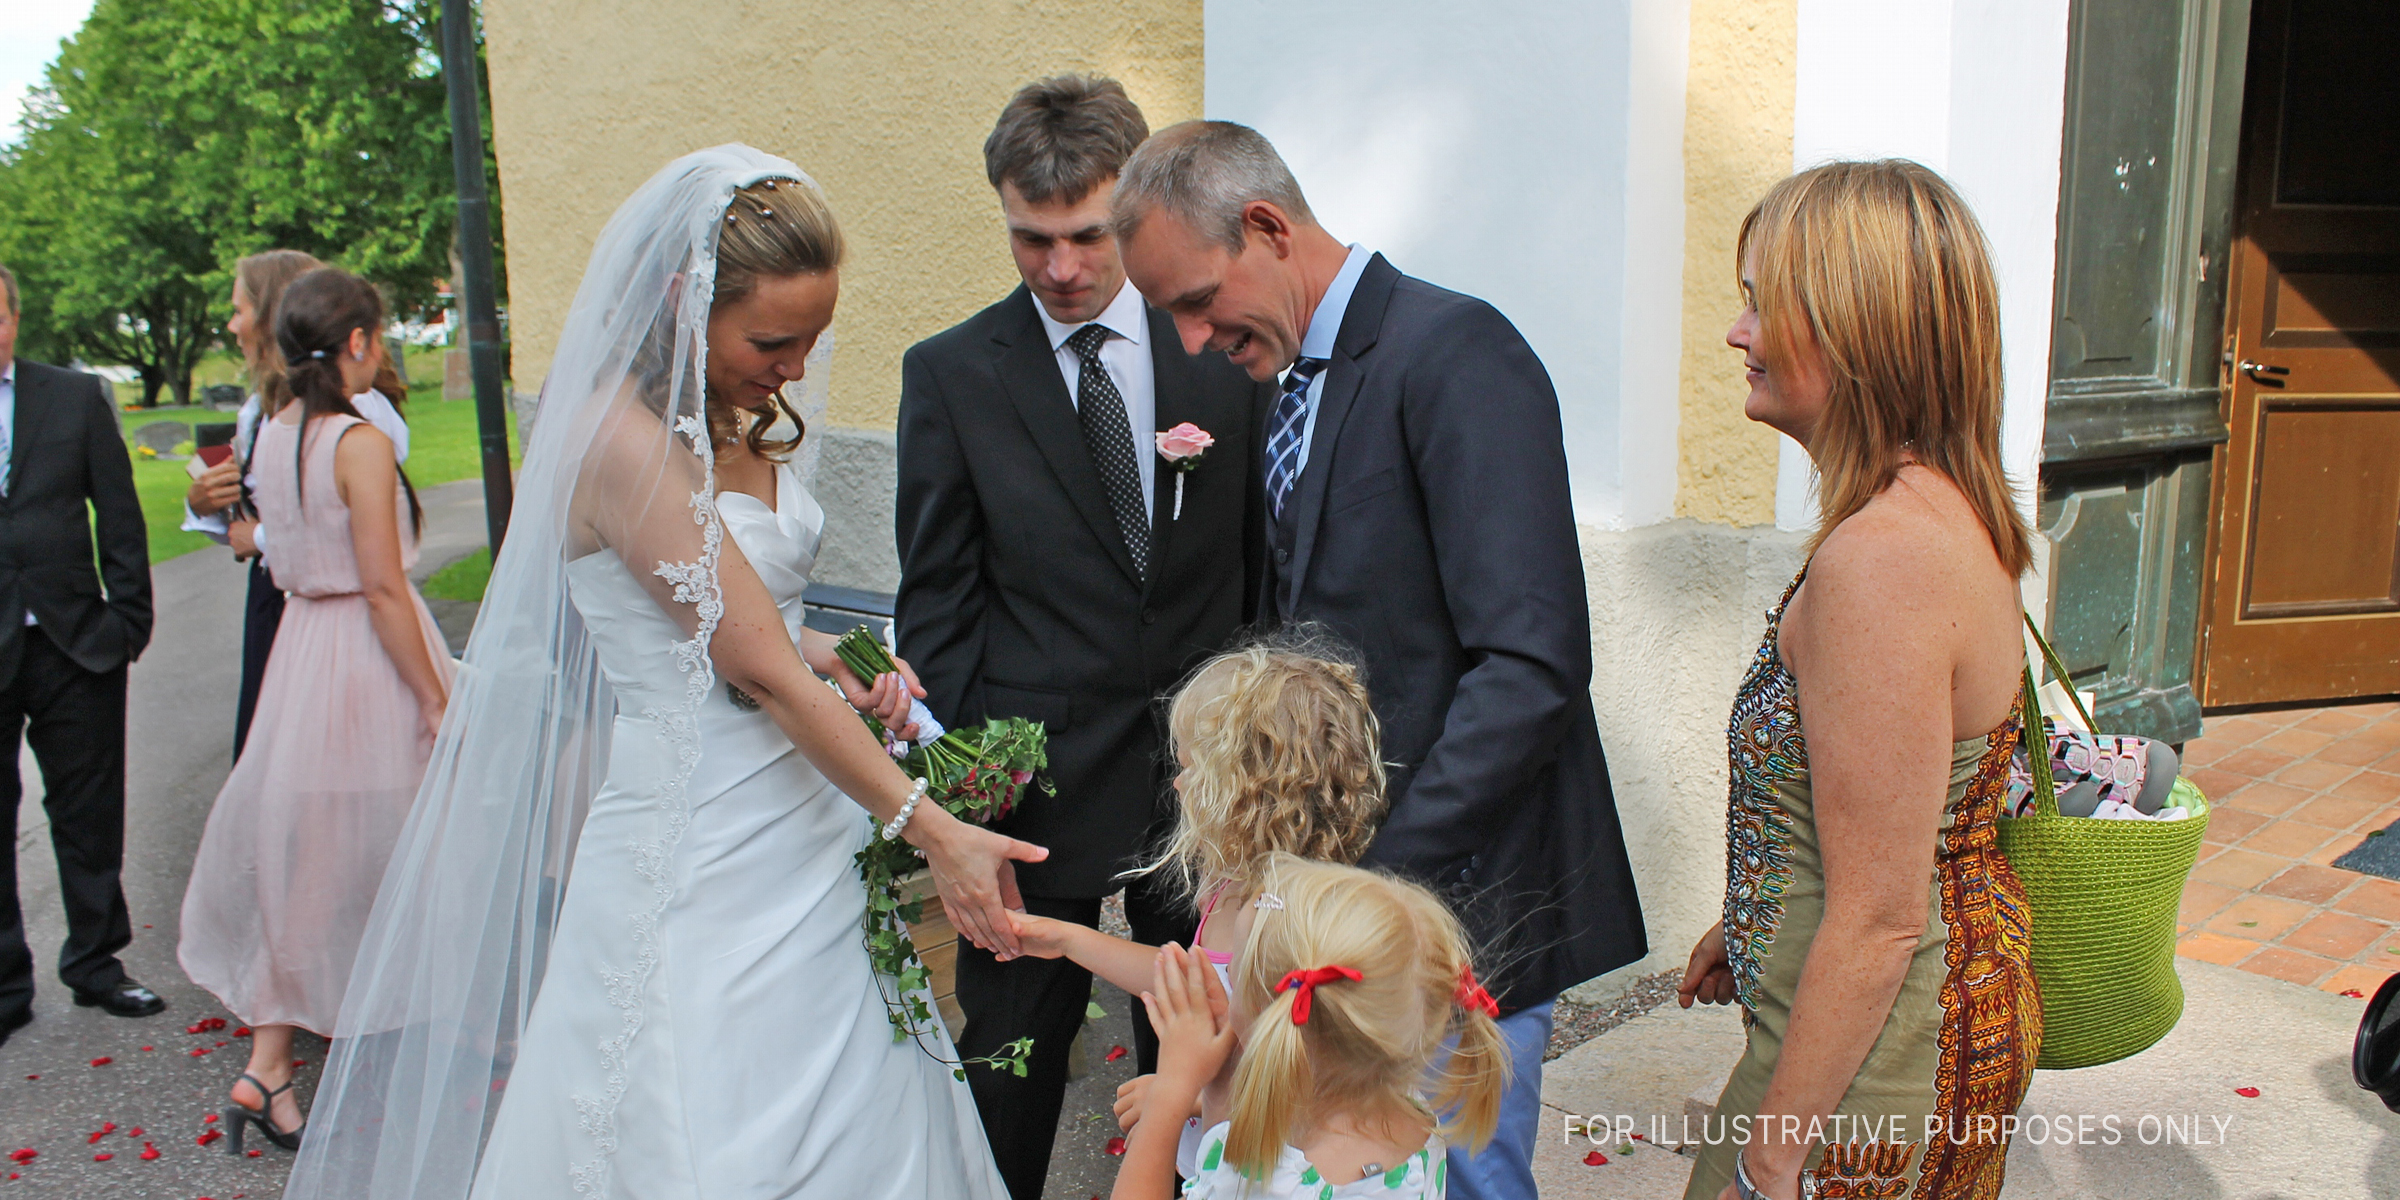 Happy Bride With Flower Girls On Her Wedding Day. | Source: Flickr/sebilden (CC BY 2.0)